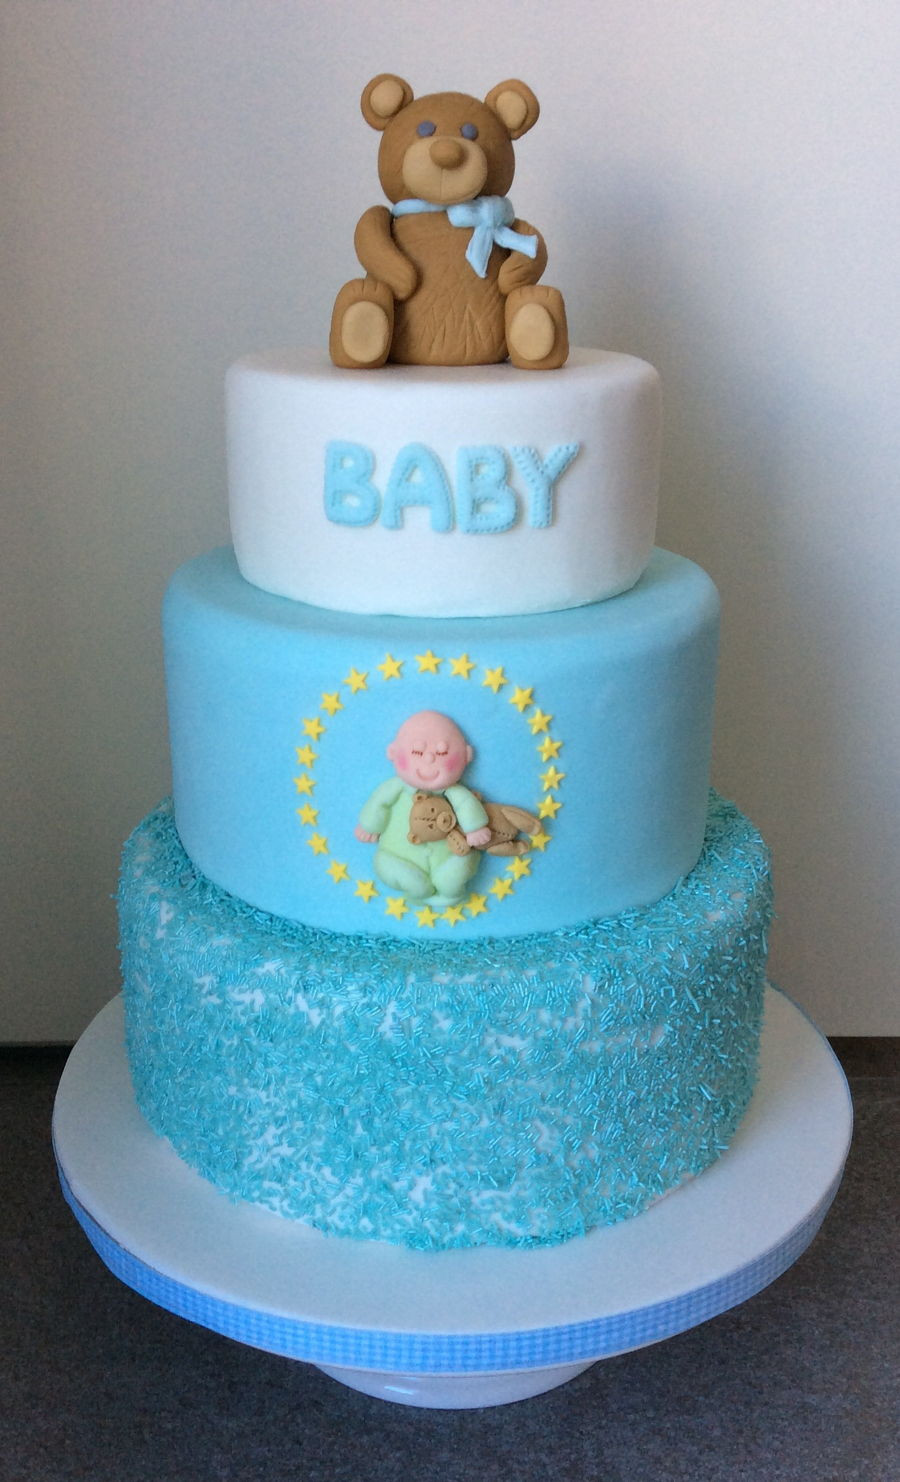 Birthday Cake For Baby Boy
 New Baby Boy Cake CakeCentral